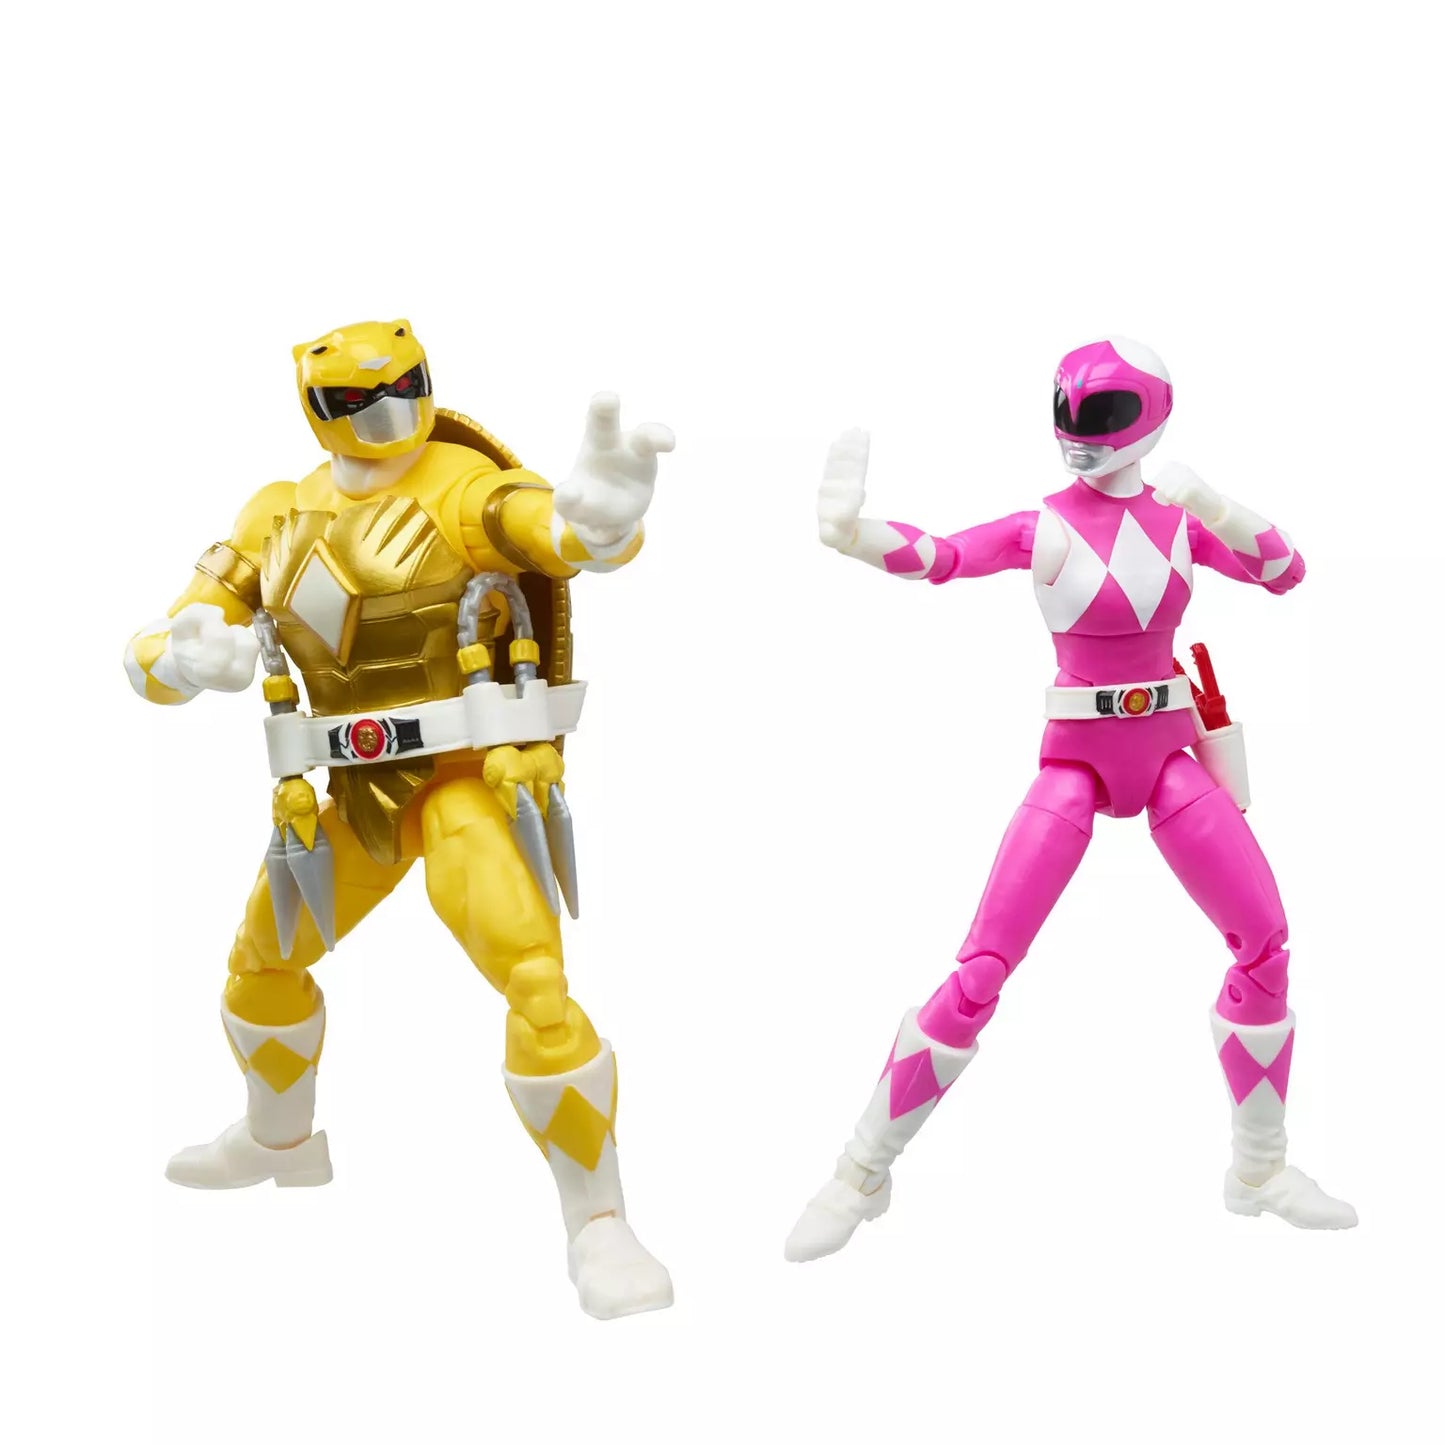 Power Rangers X Teenage Mutant Ninja Turtles Morphed April and Morphed Michelangelo Action Figure 2-Pack